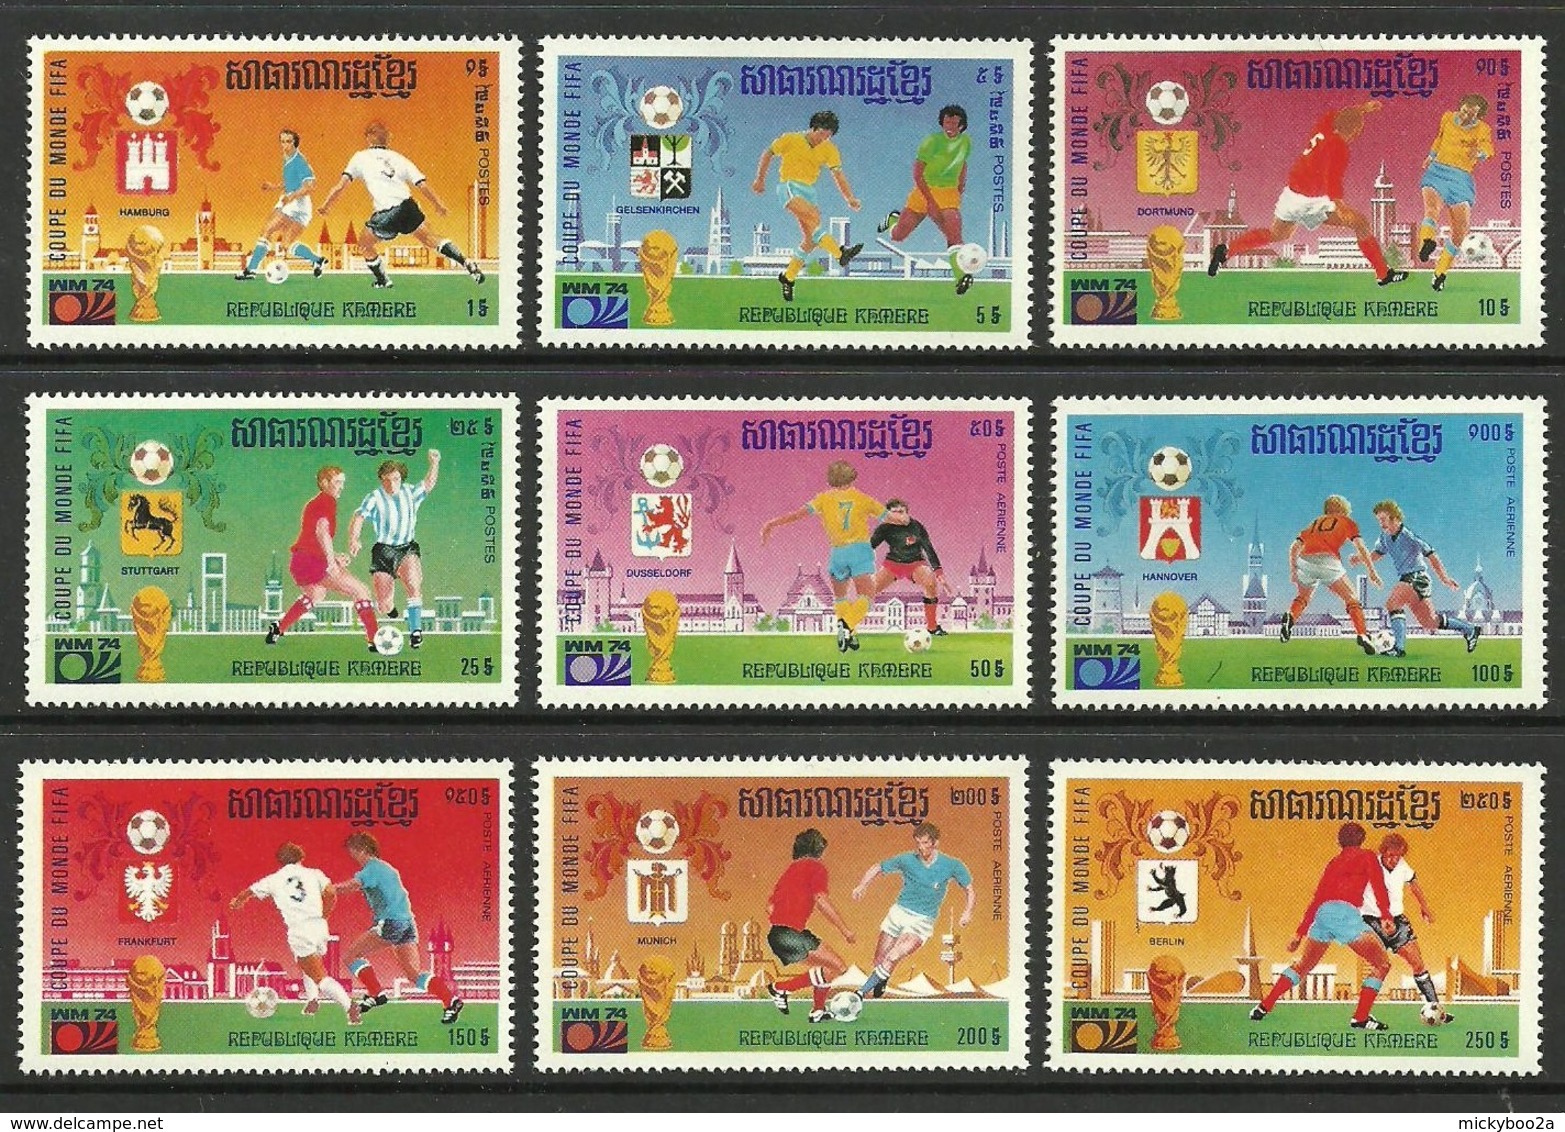 KHMER 1974 SPORT FOOTBALL SET MNH - Cambodia